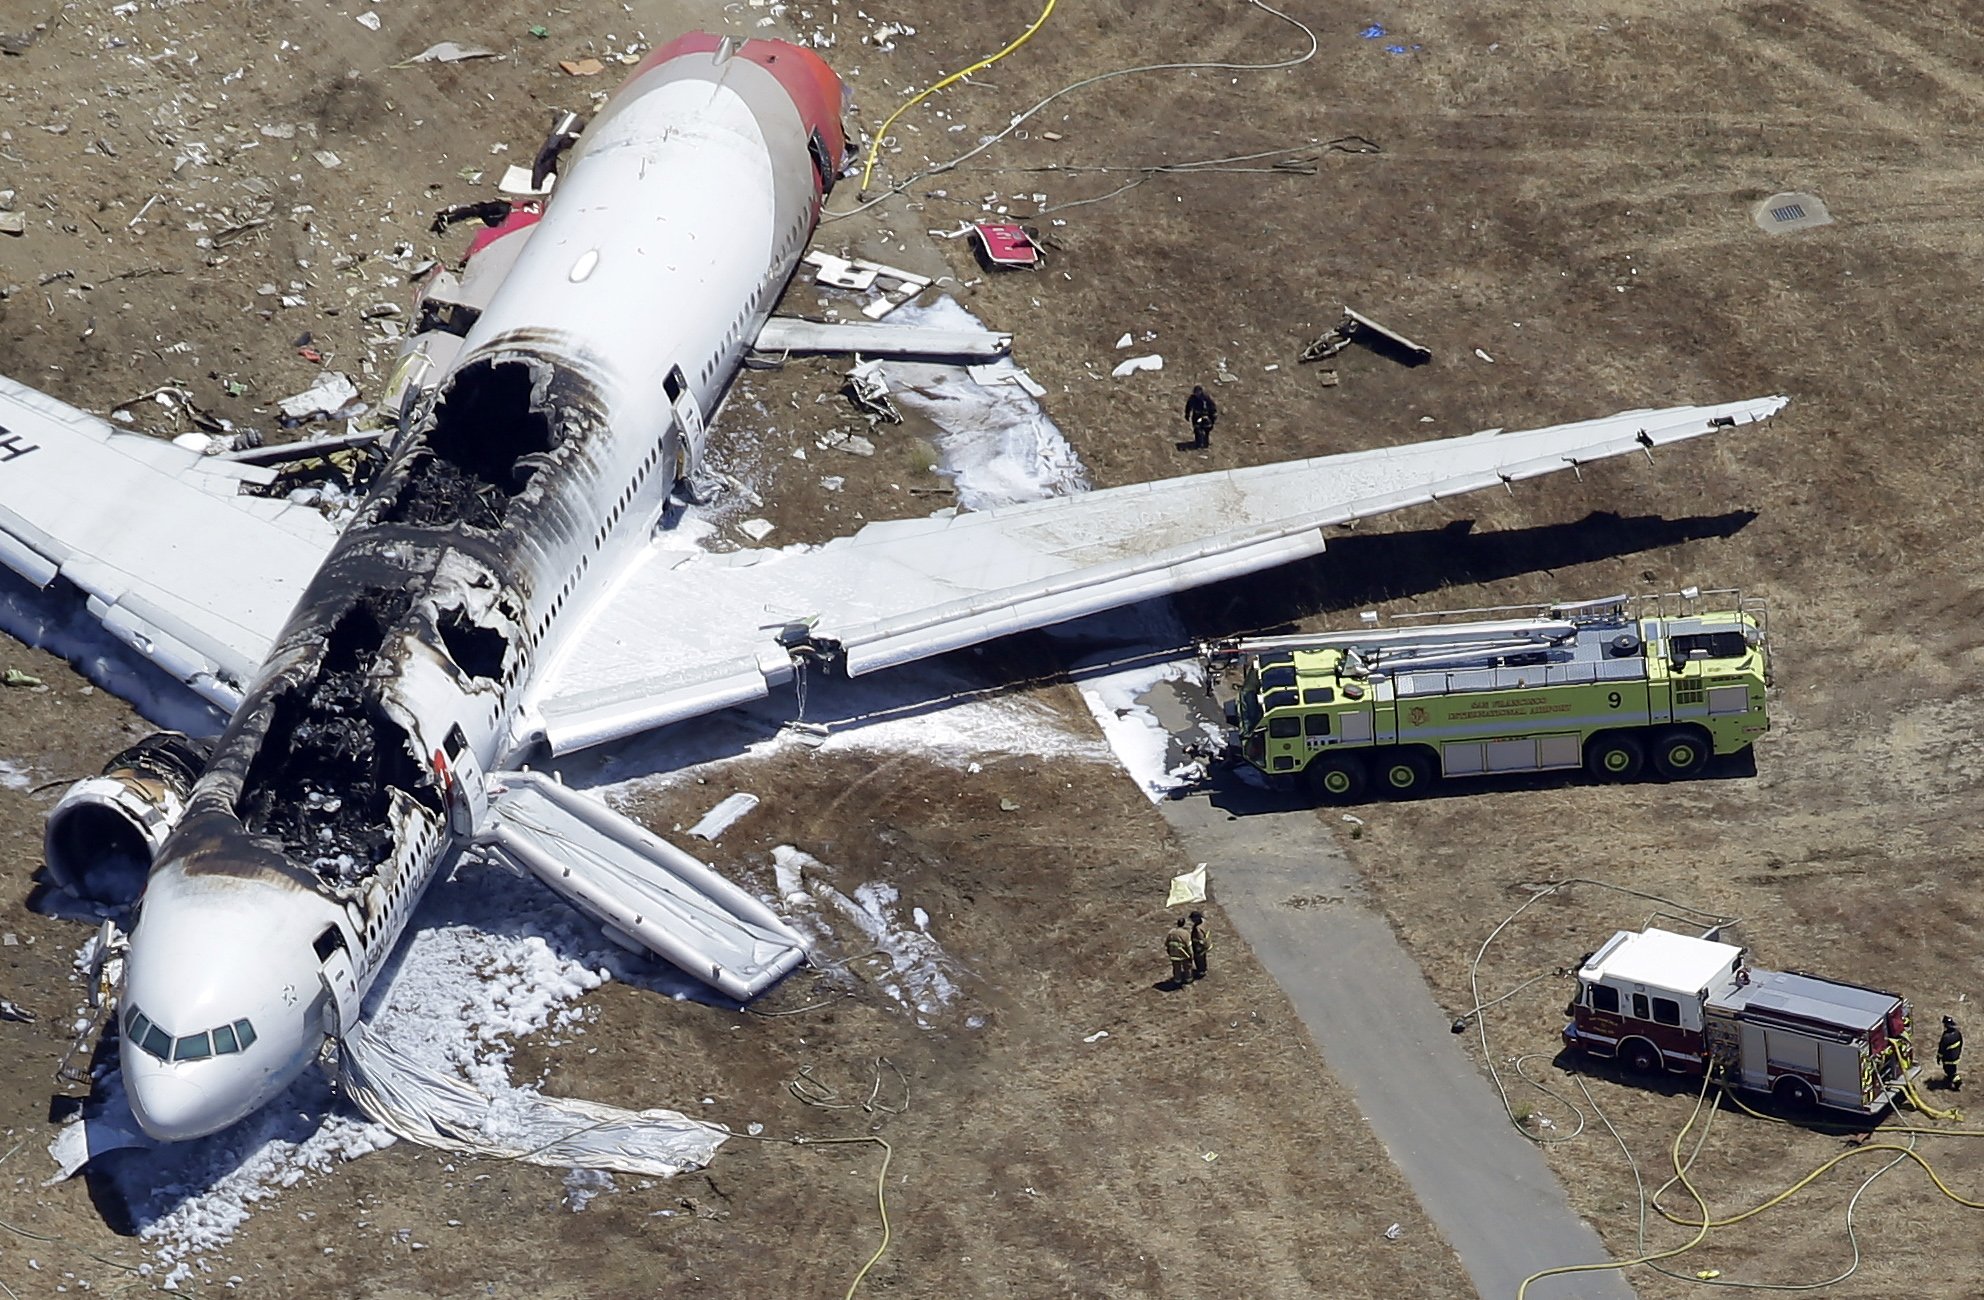 The scene of the Asiana Flight 214 crash in San Francisco. Photo: AP